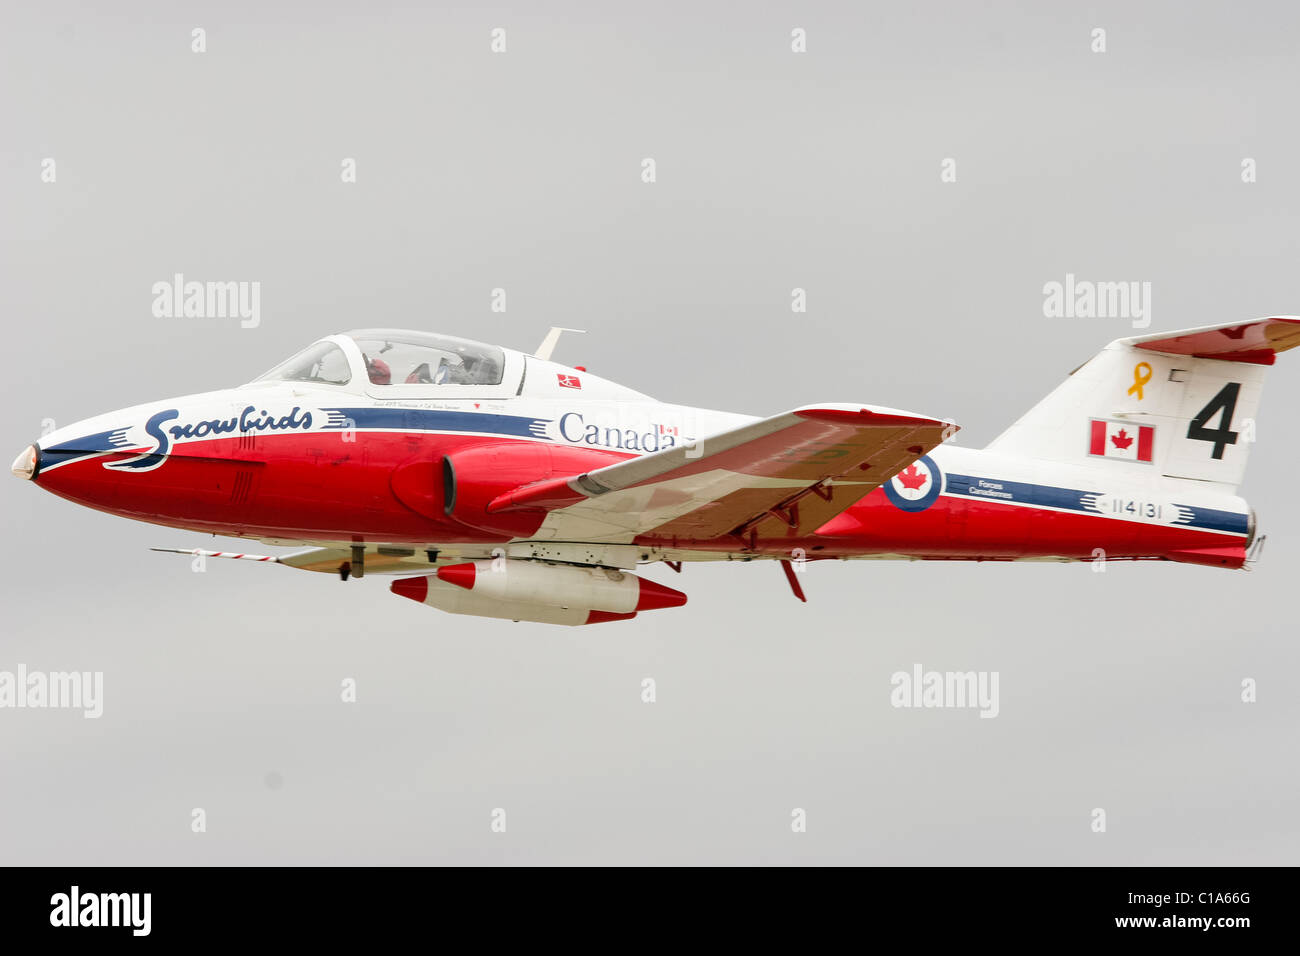 Canadian Forces 431 Air Demonstration Squadron - the Snowbirds - Ct-114 Tudor jet. Stock Photo